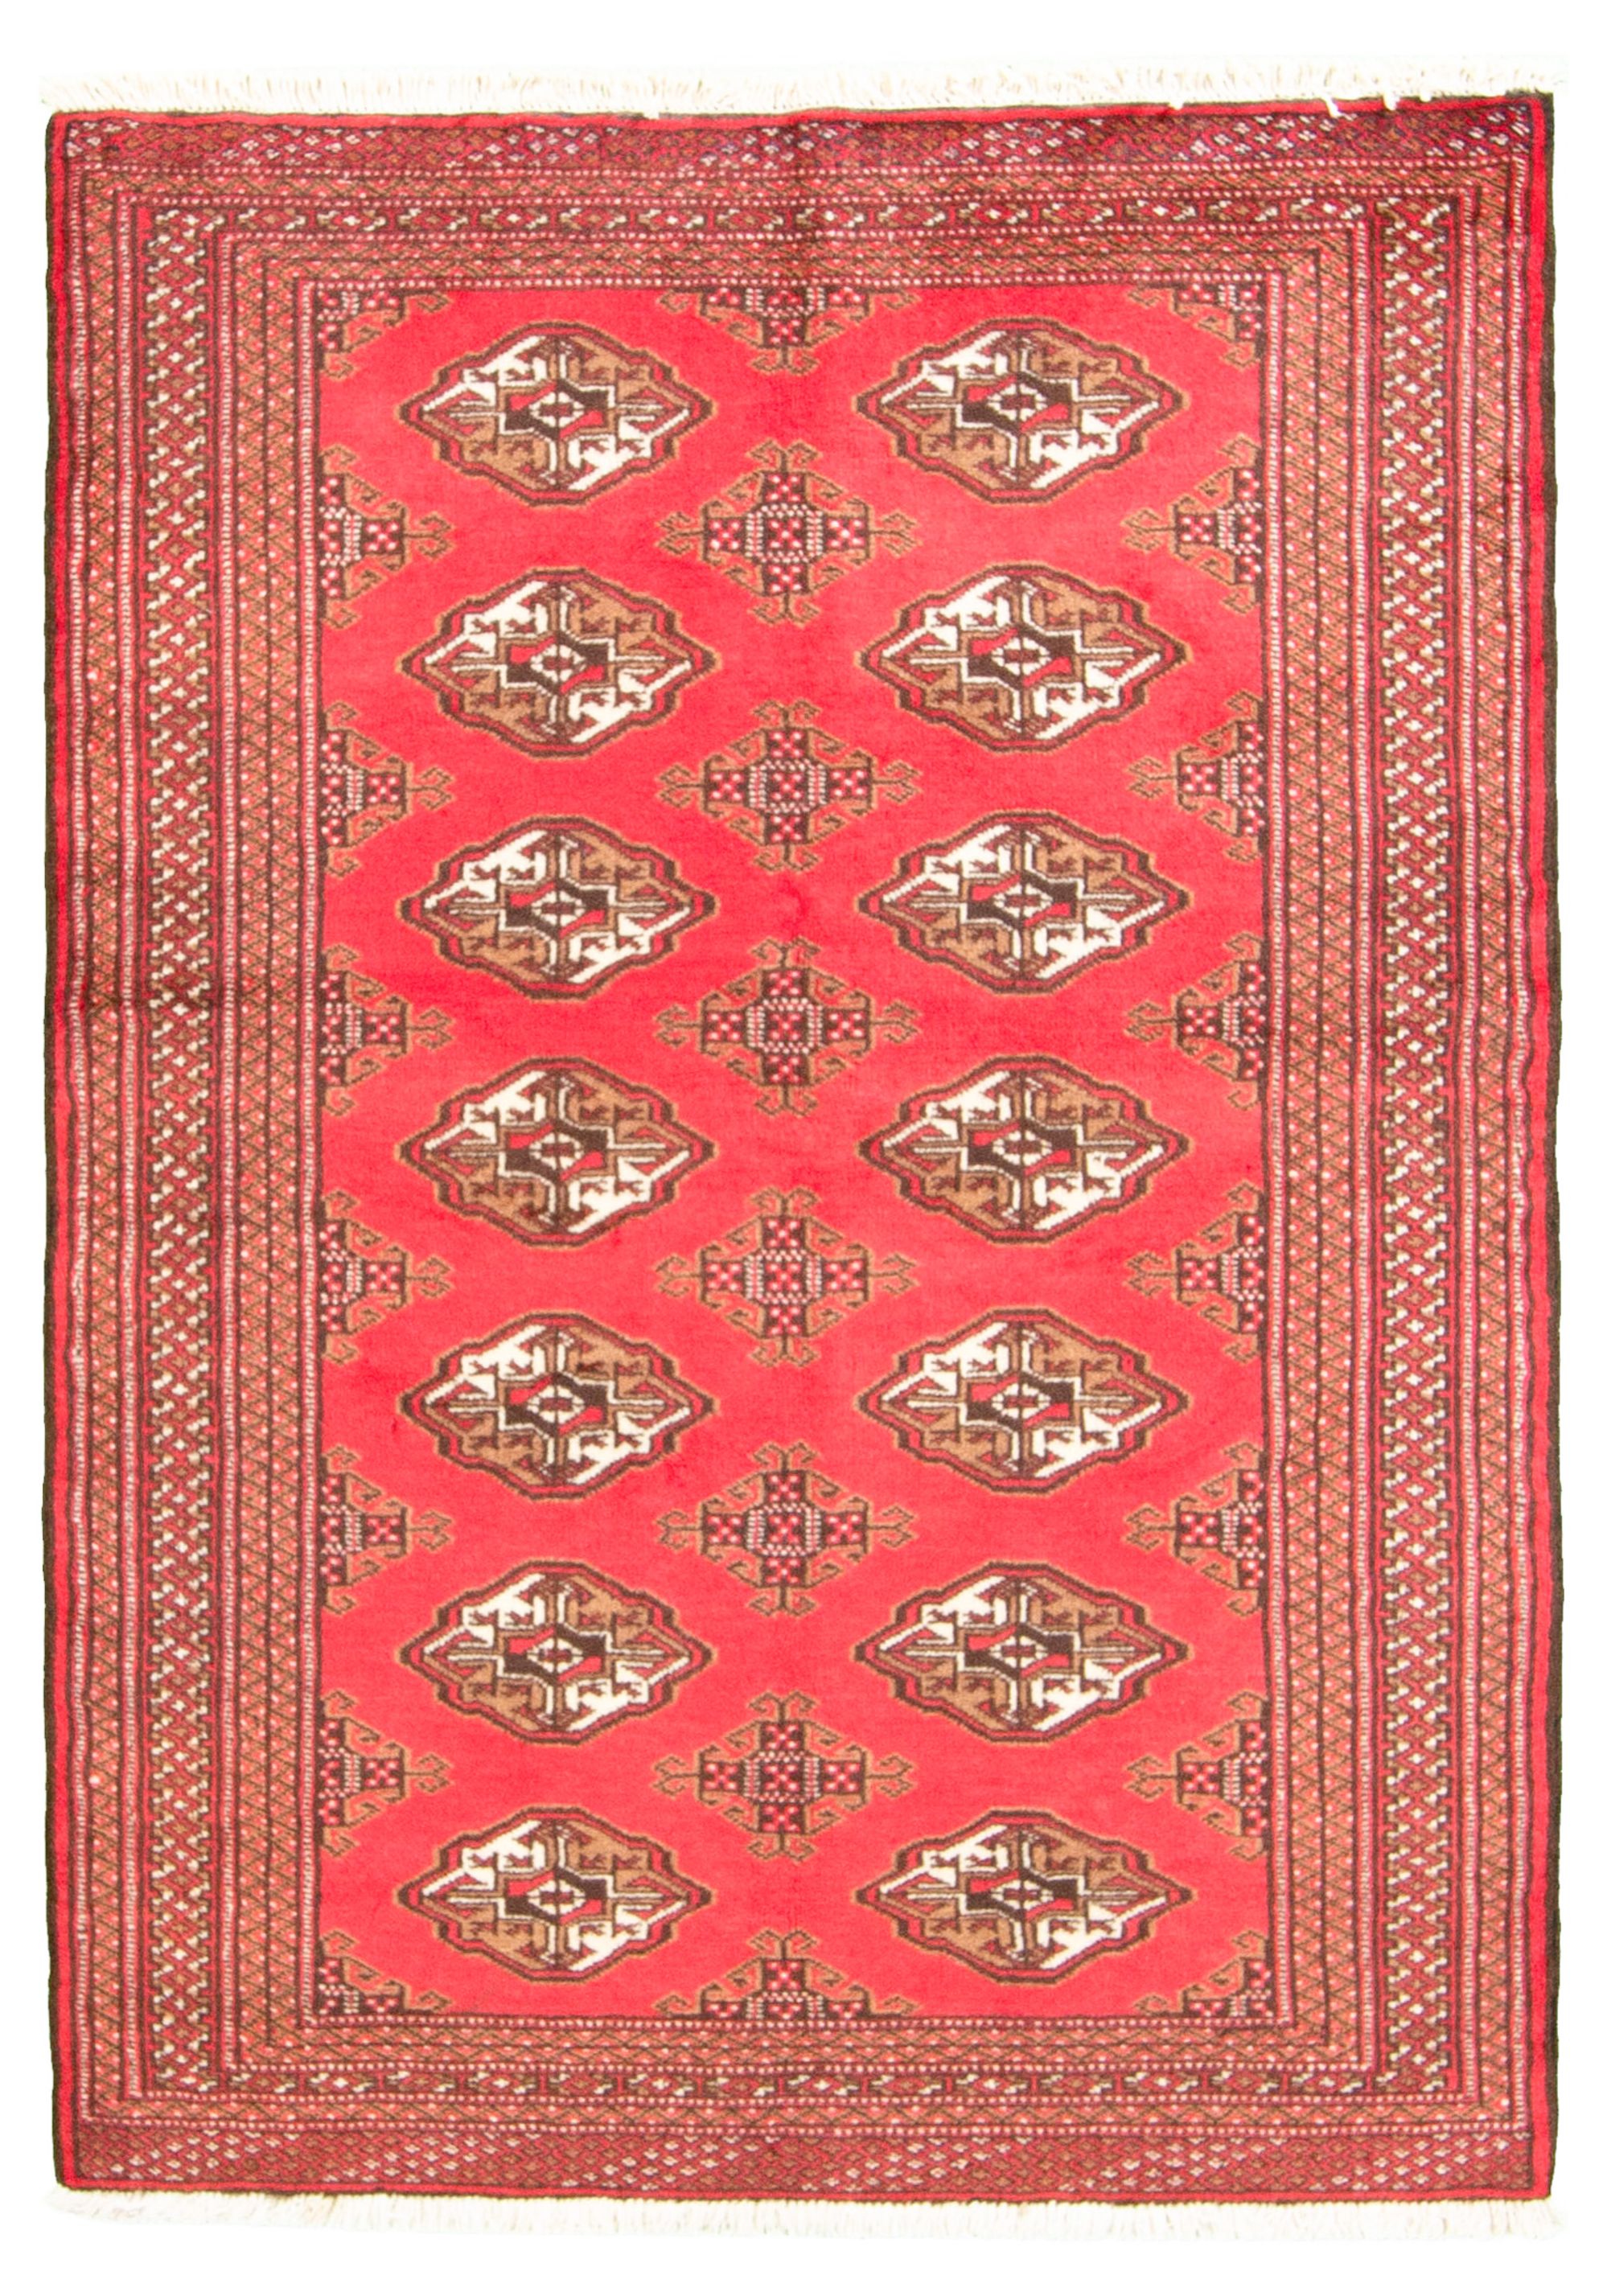 Hand-knotted Turkoman  Wool Rug 3'5" x 4'10"  Size: 3'5" x 4'10"  